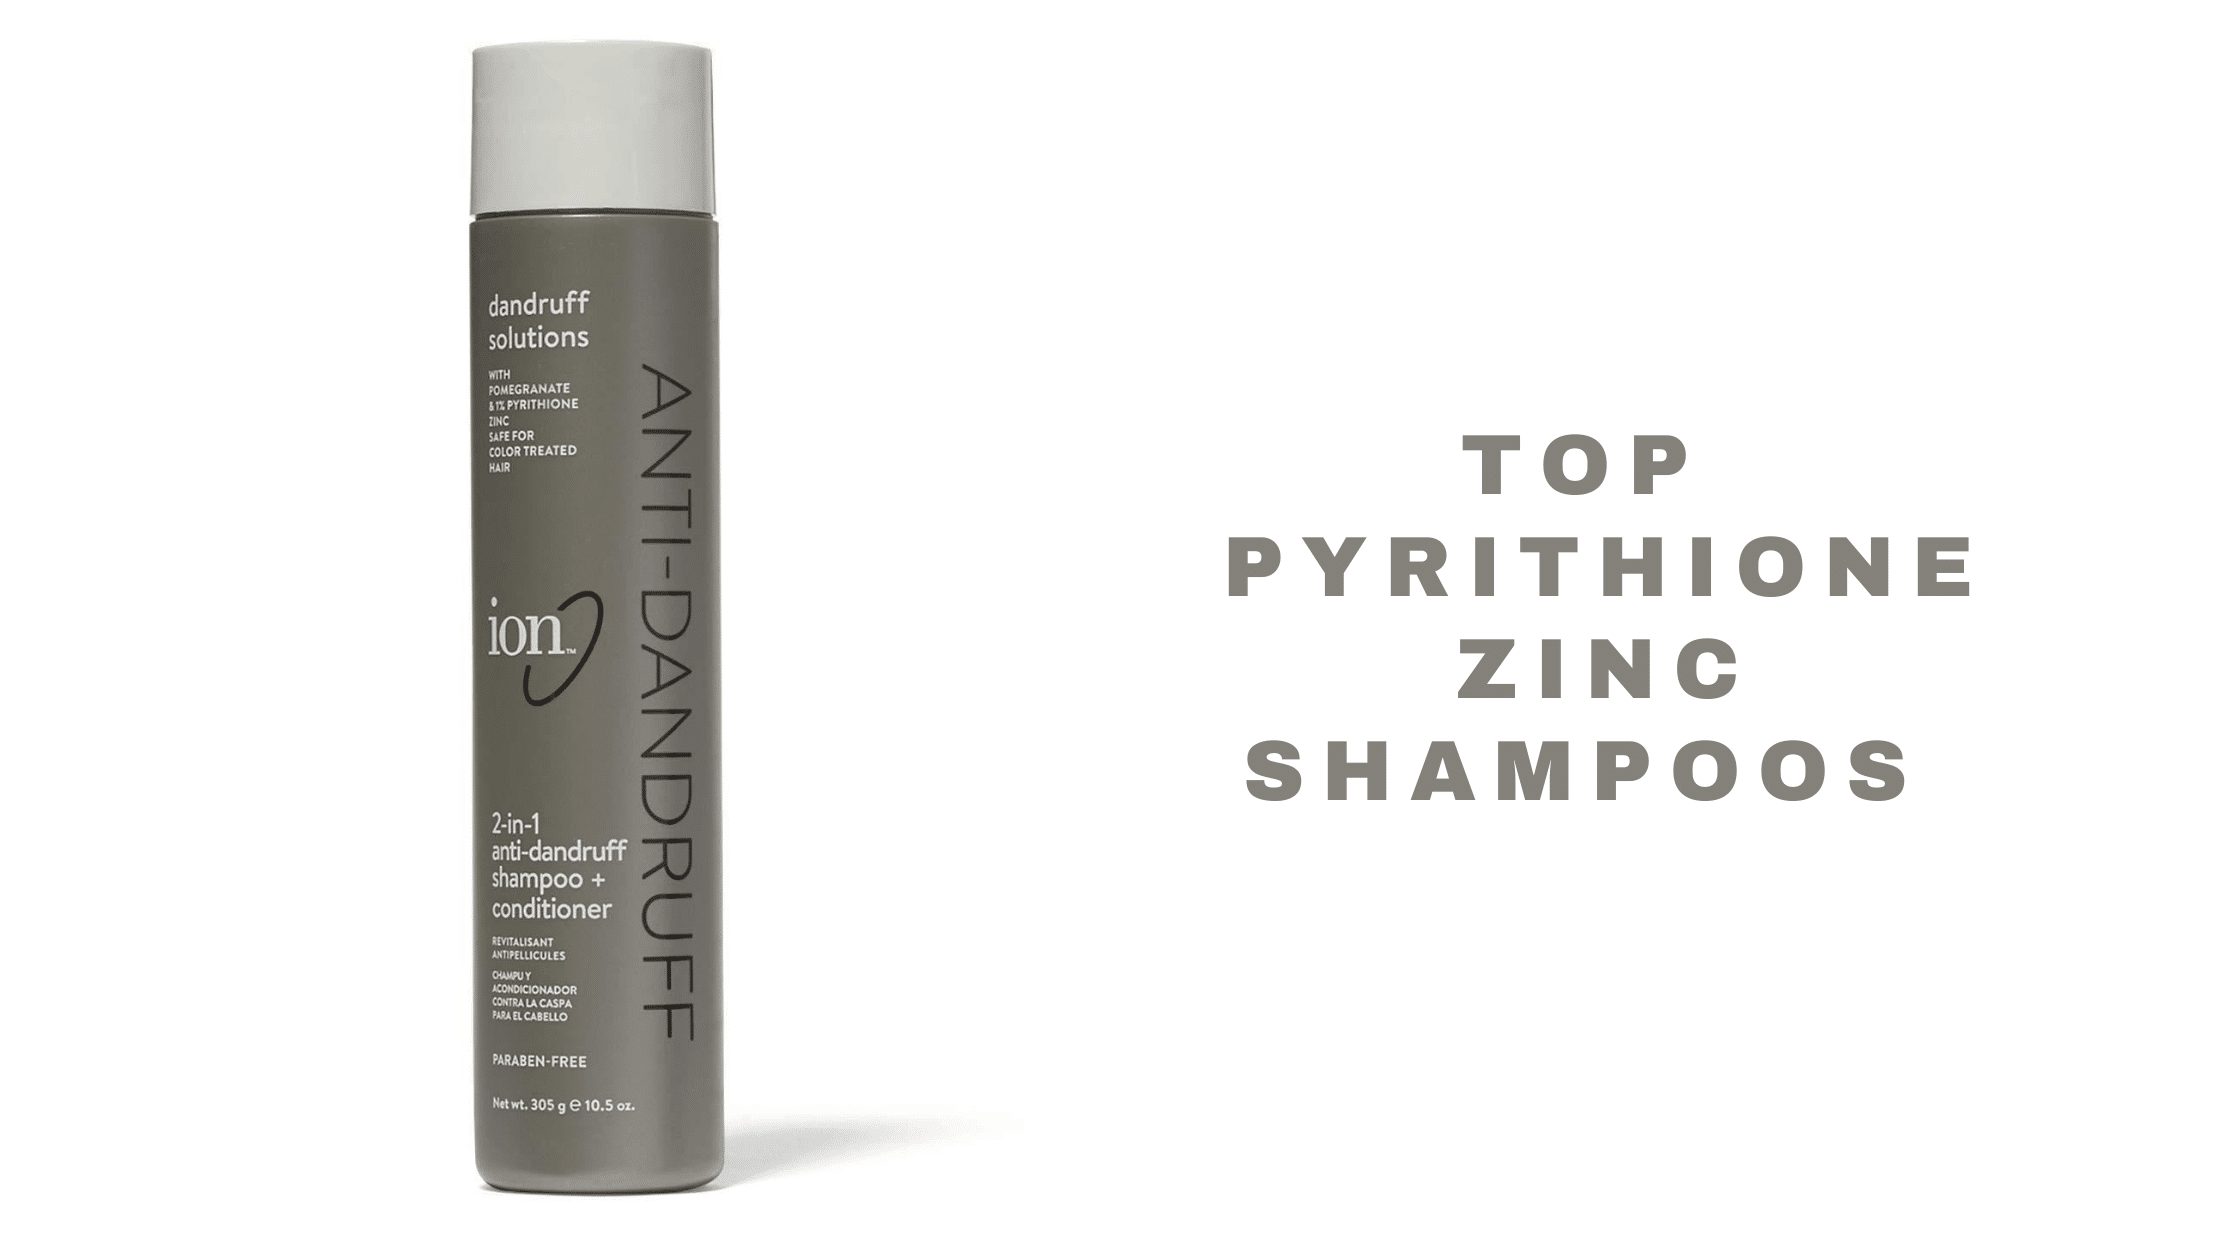 9 Top Pyrithione Zinc Shampoos 2021